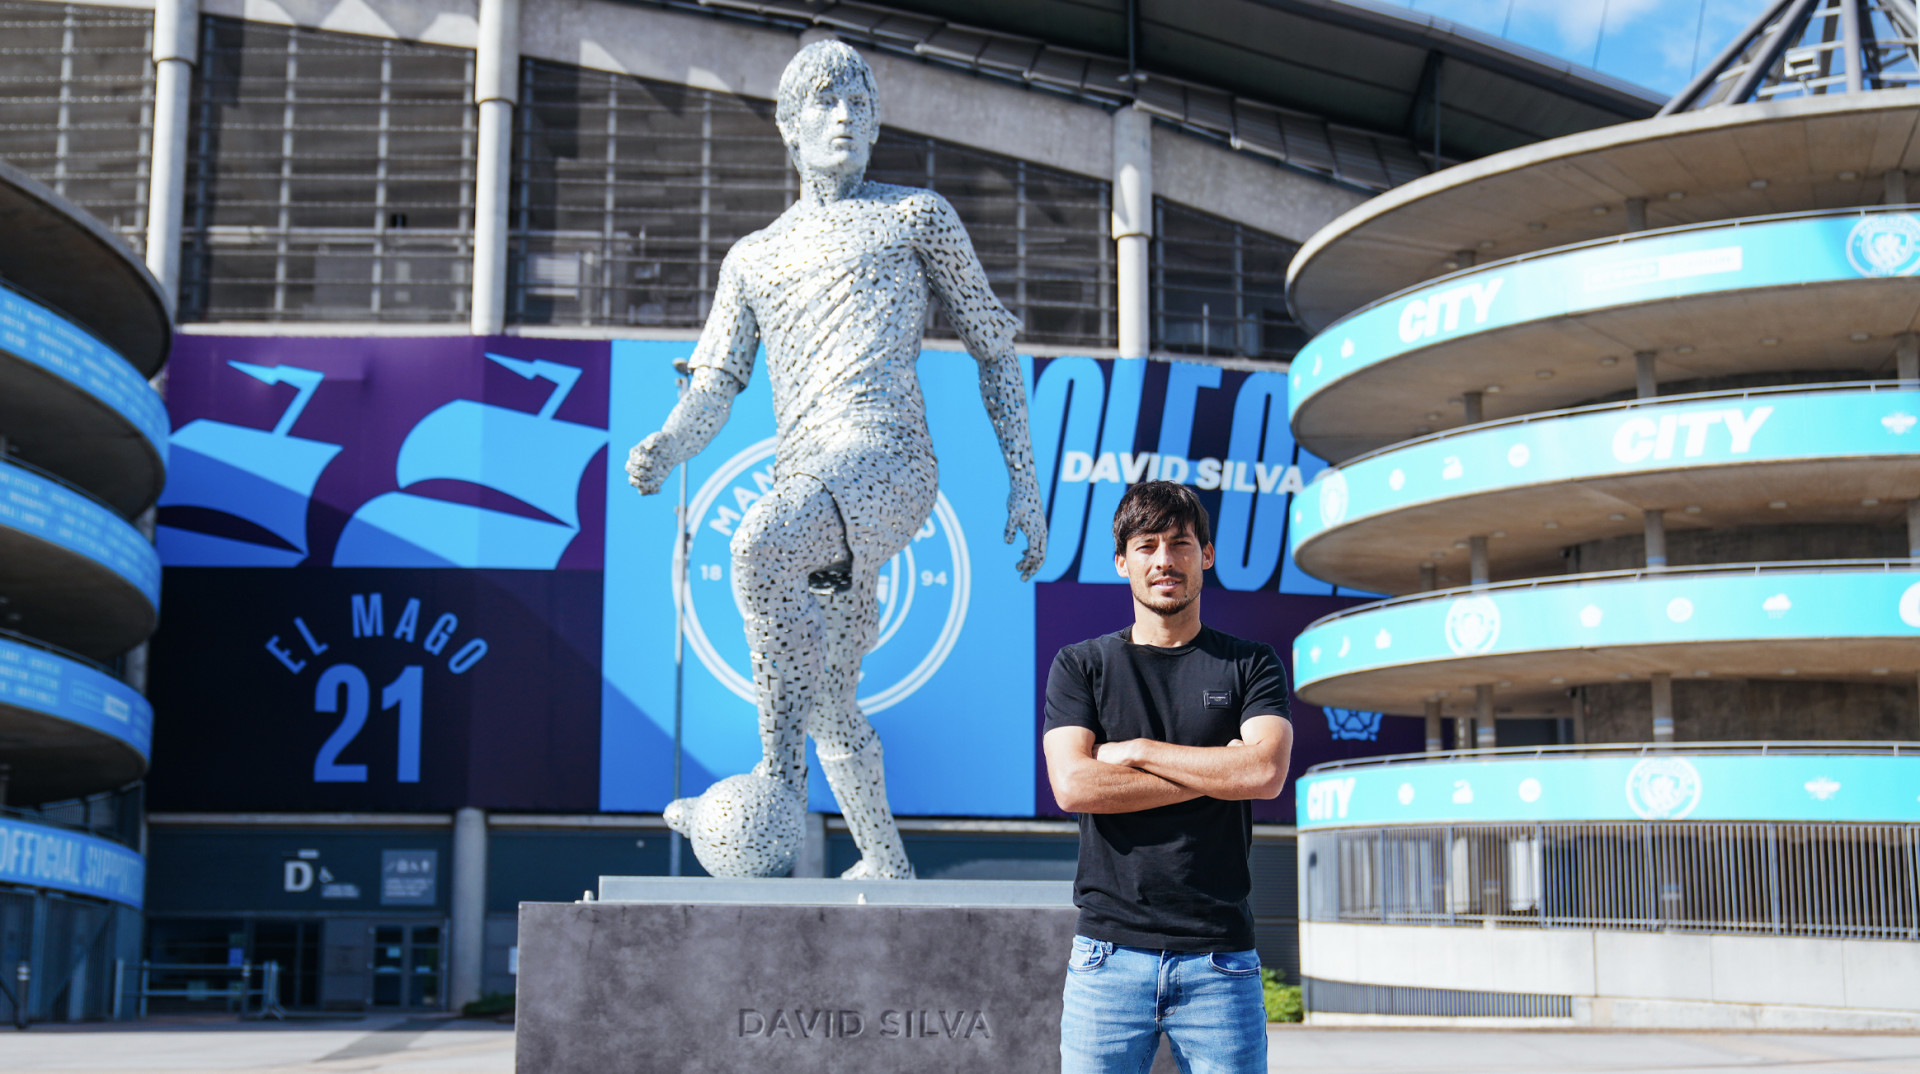 David Silva in front of his statue at Man City stadium